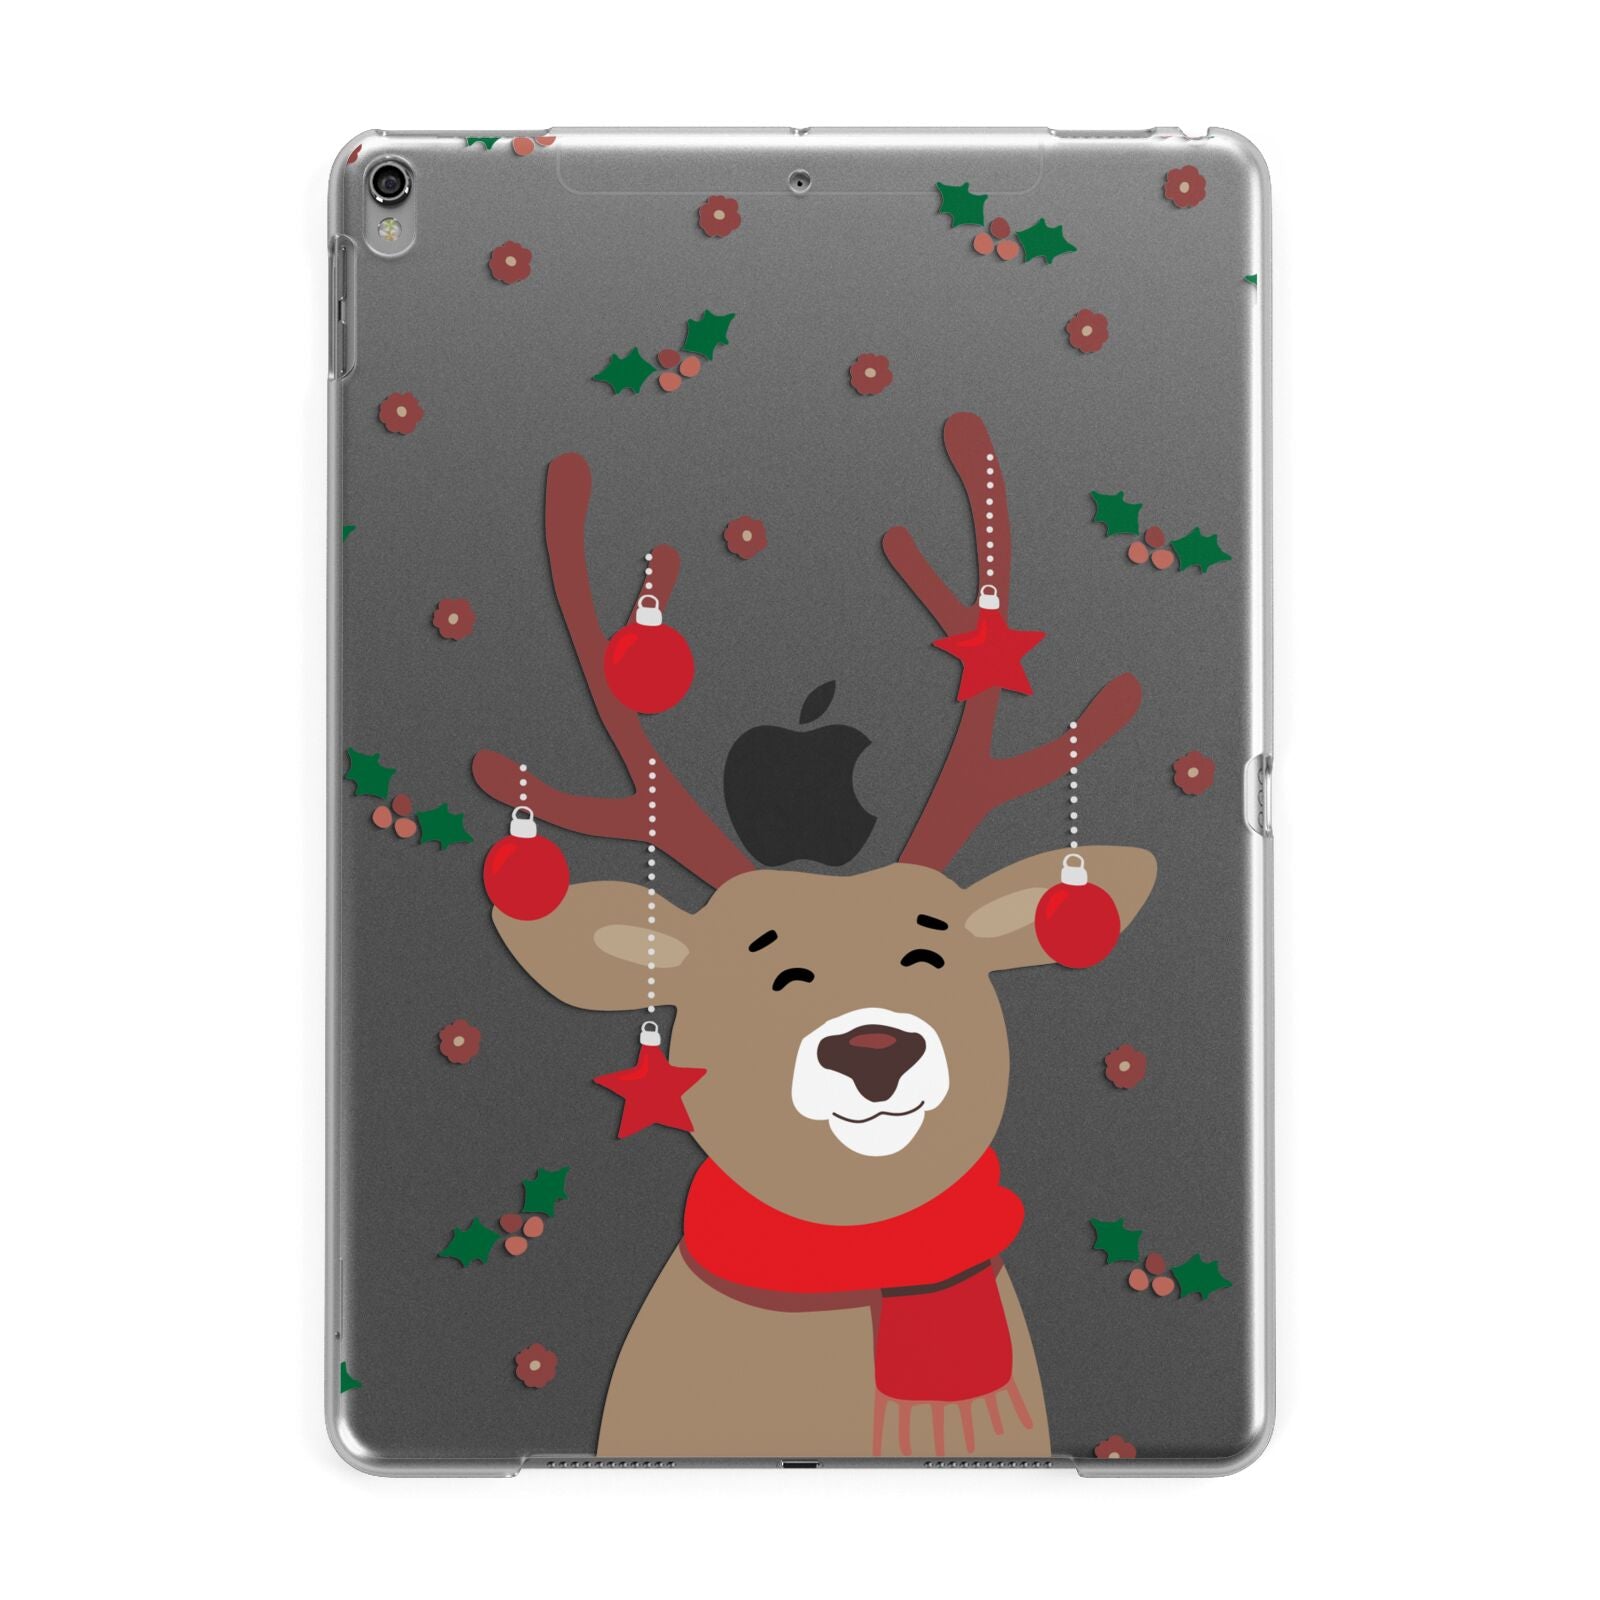 Reindeer Christmas Apple iPad Grey Case